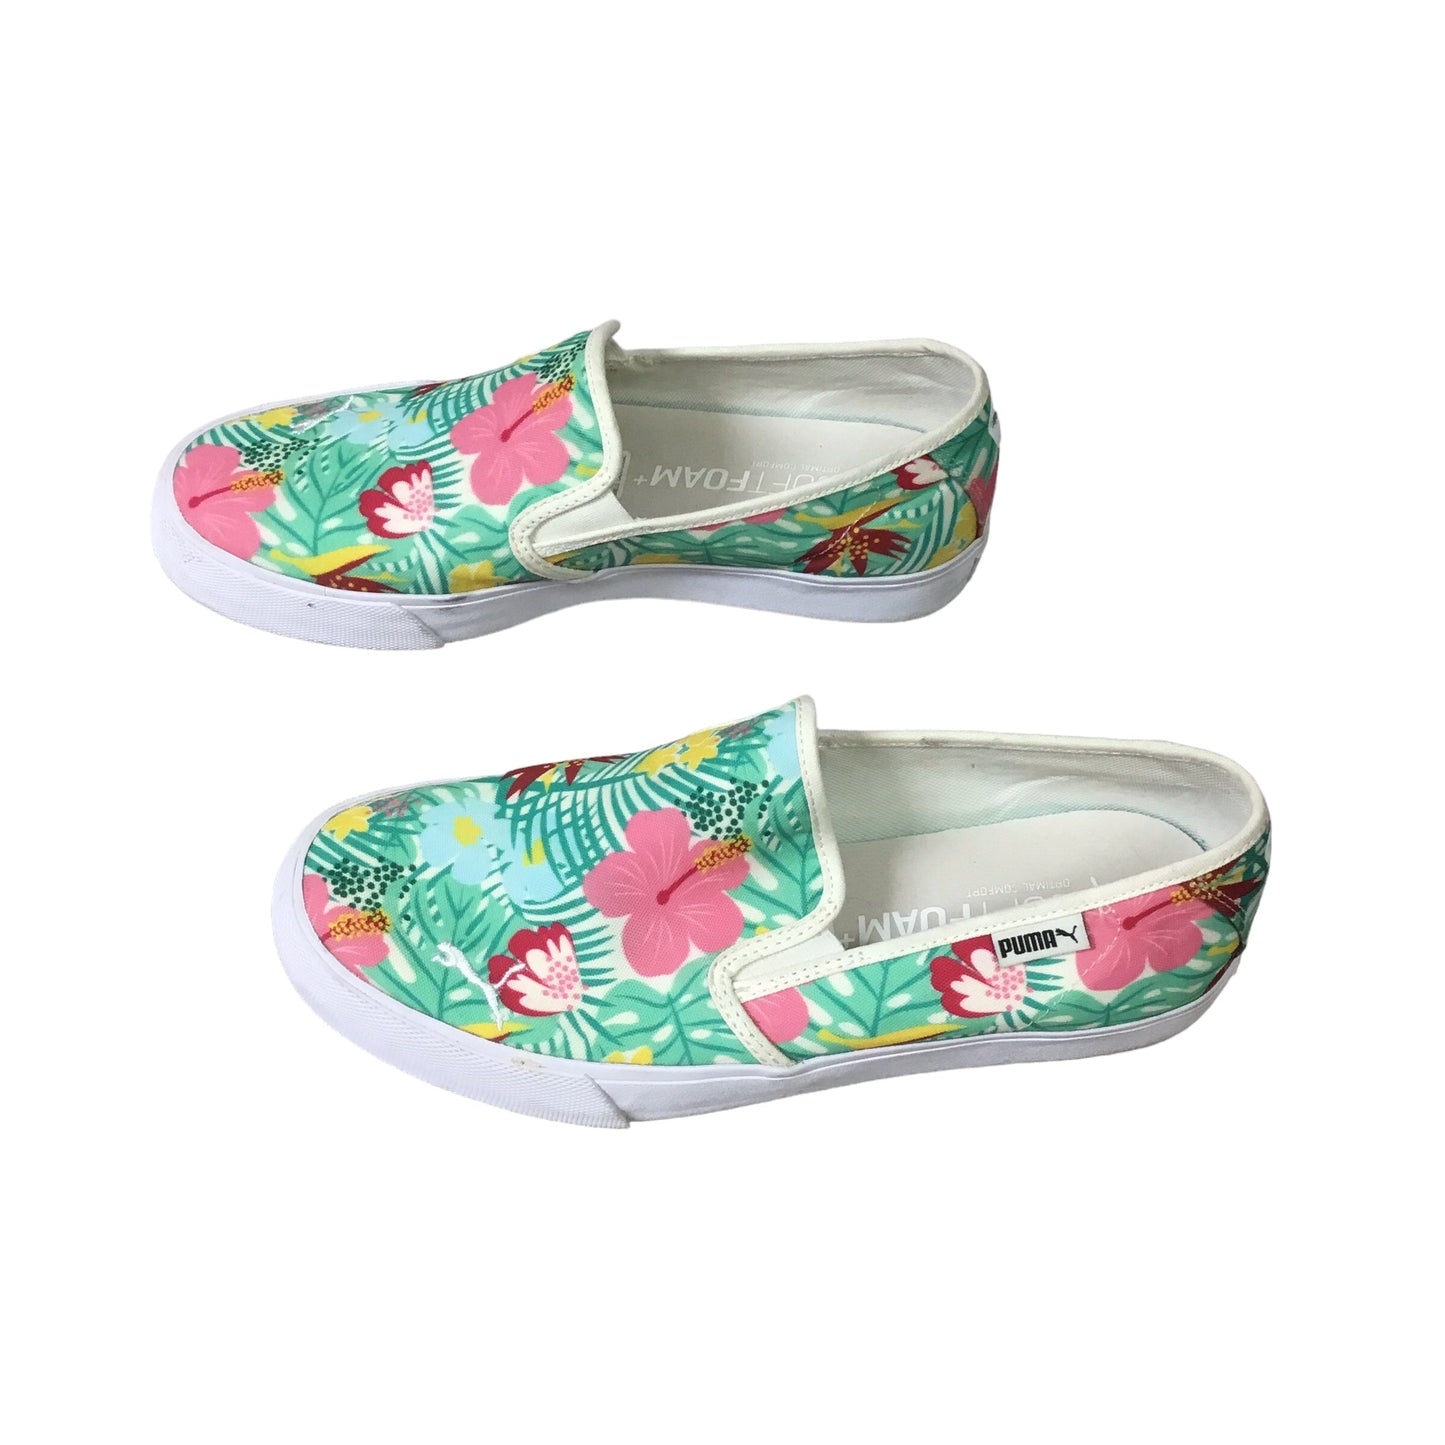 Tropical Print Shoes Flats Puma, Size 9